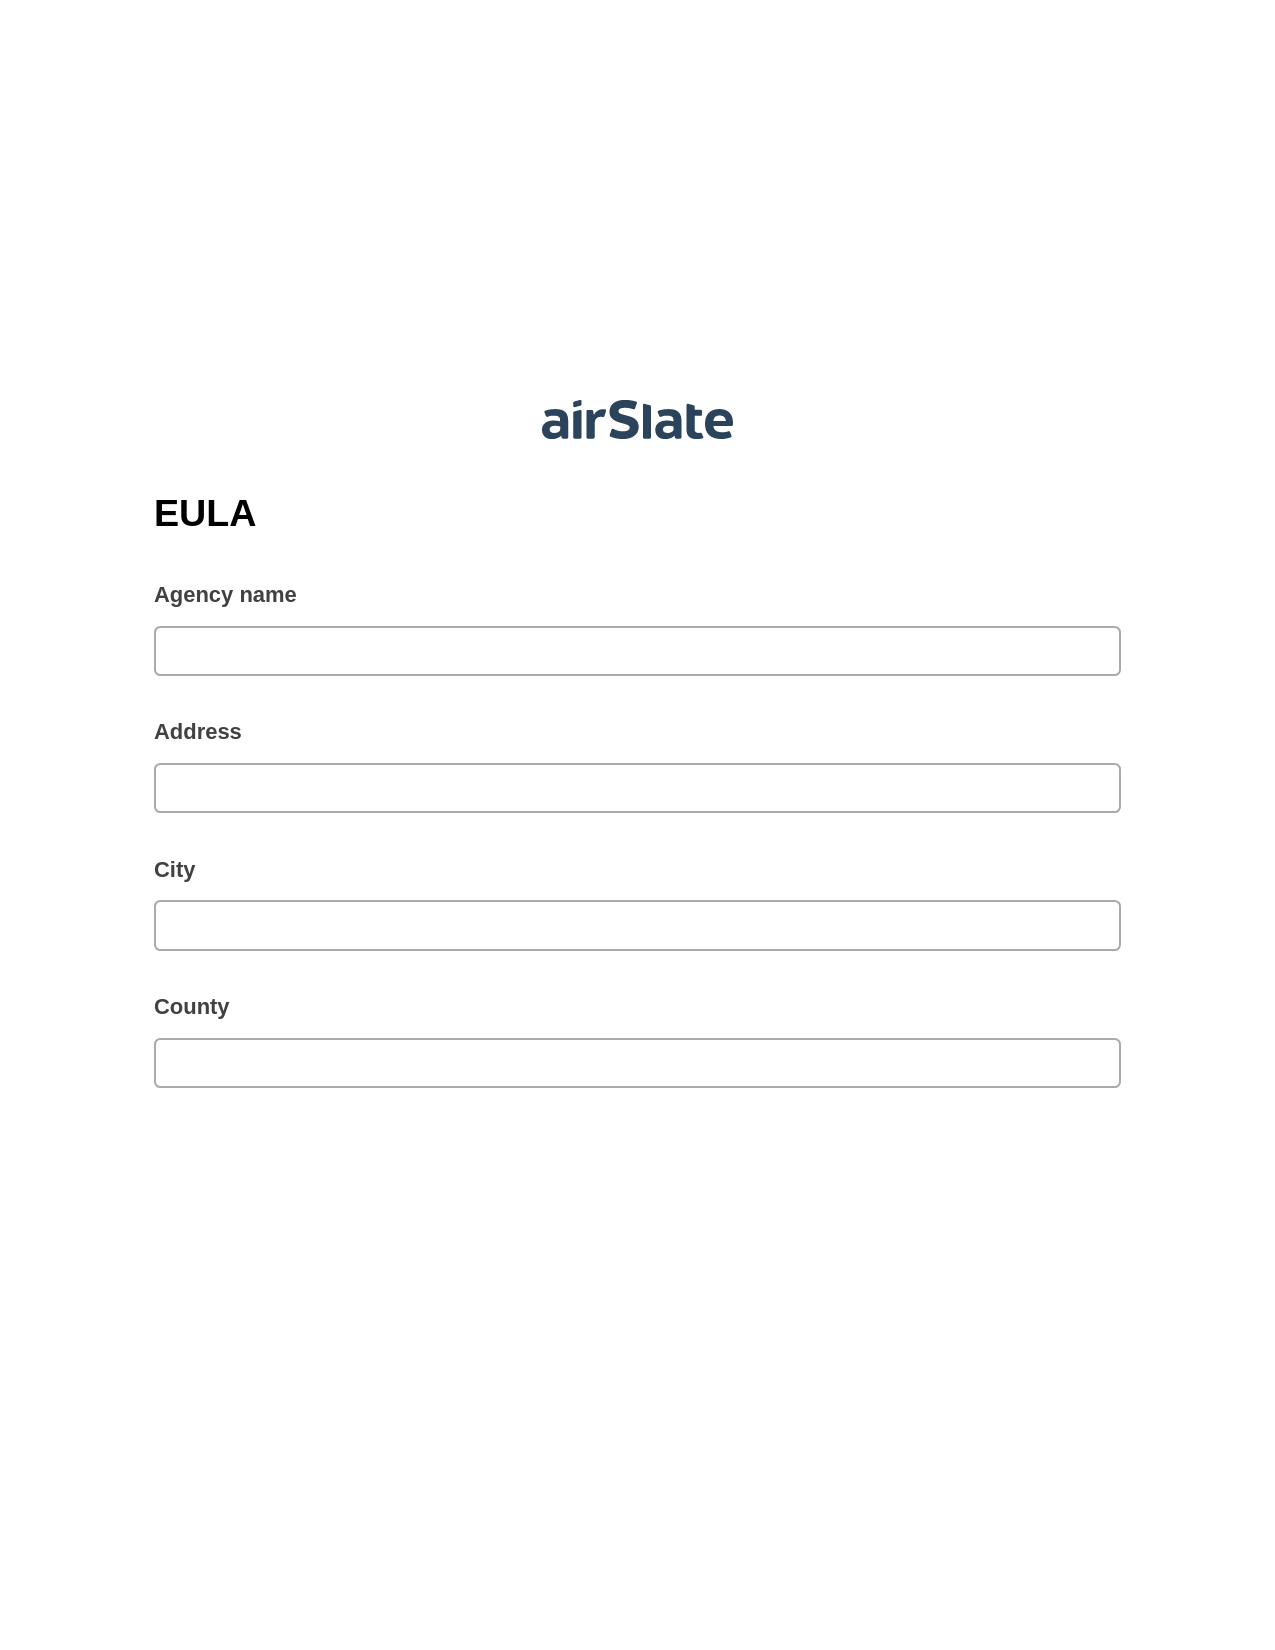 EULA Pre-fill from Google Sheet Dropdown Options Bot, Send a Slate to MS Dynamics 365 Contact Bot, Box Bot